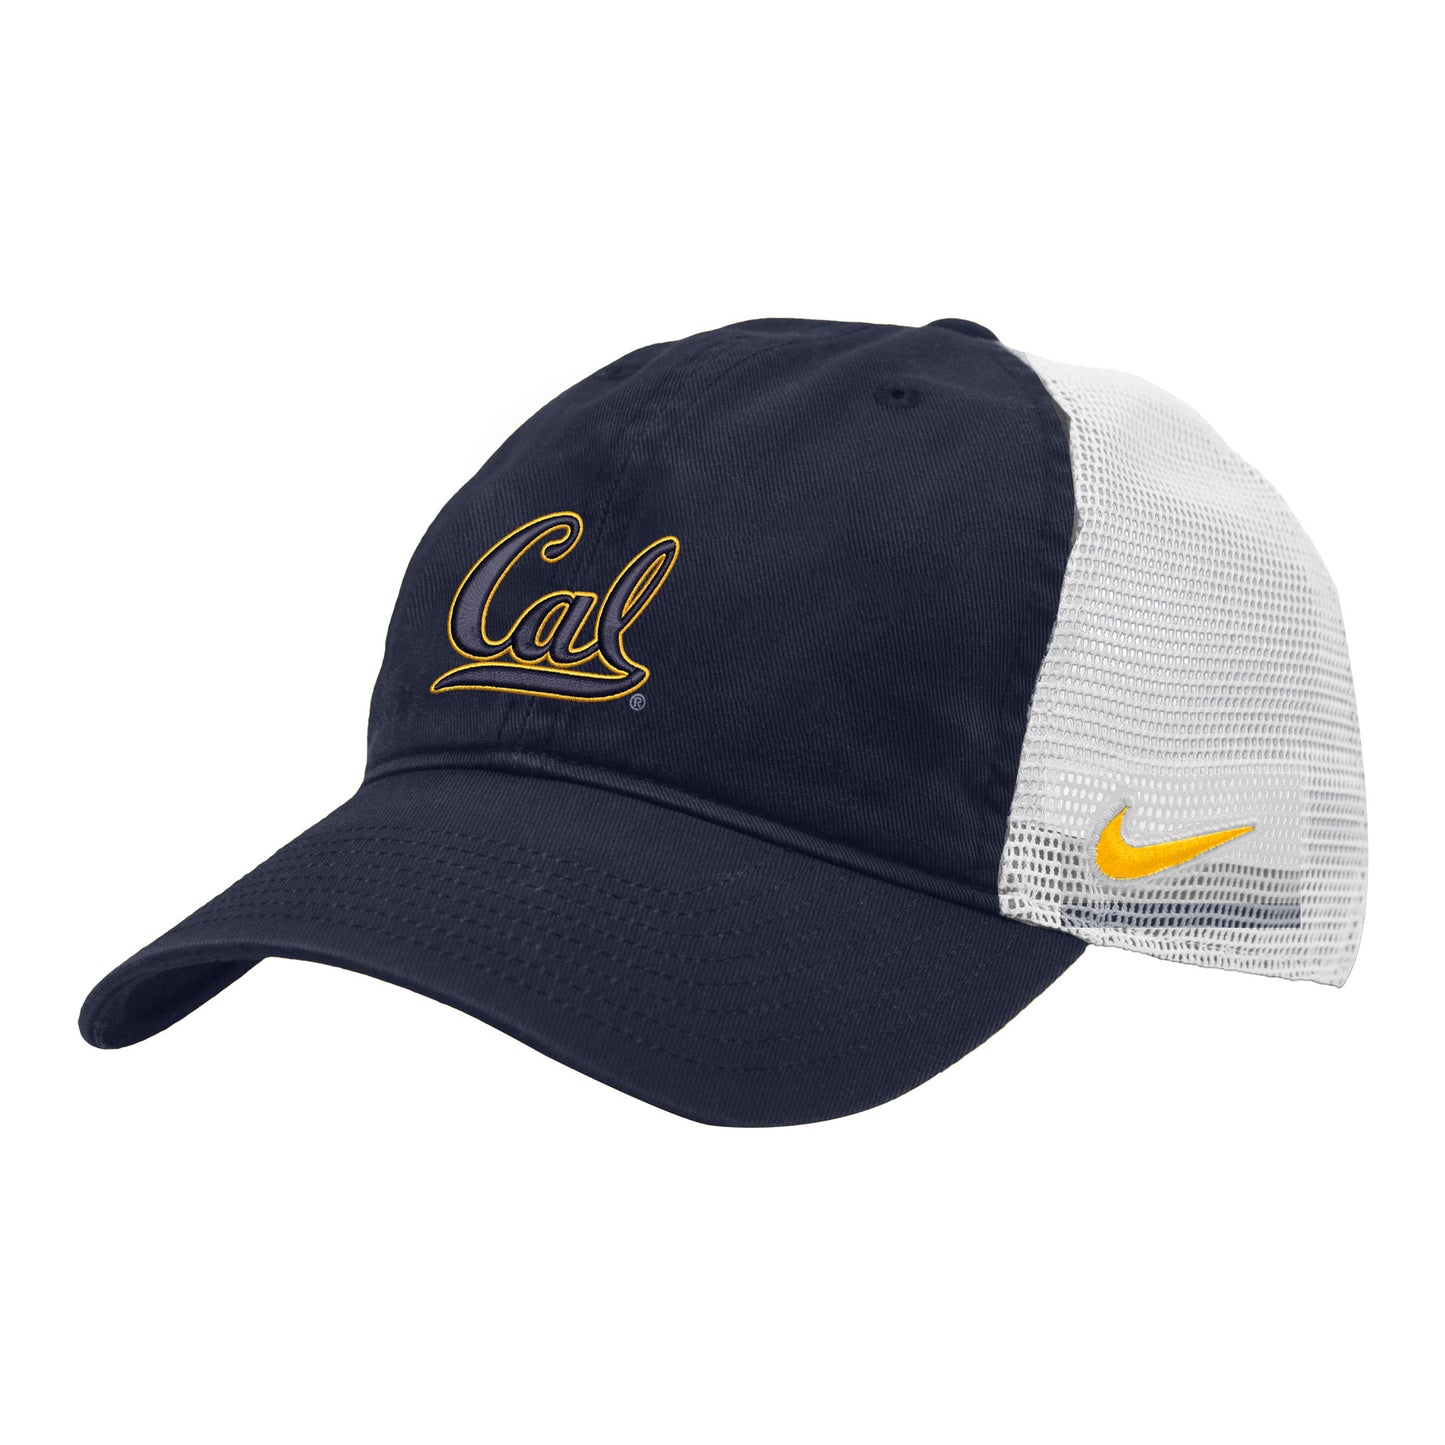 U.C. Berkeley Cal embroidered washed trucker hat-Navy-Shop College Wear